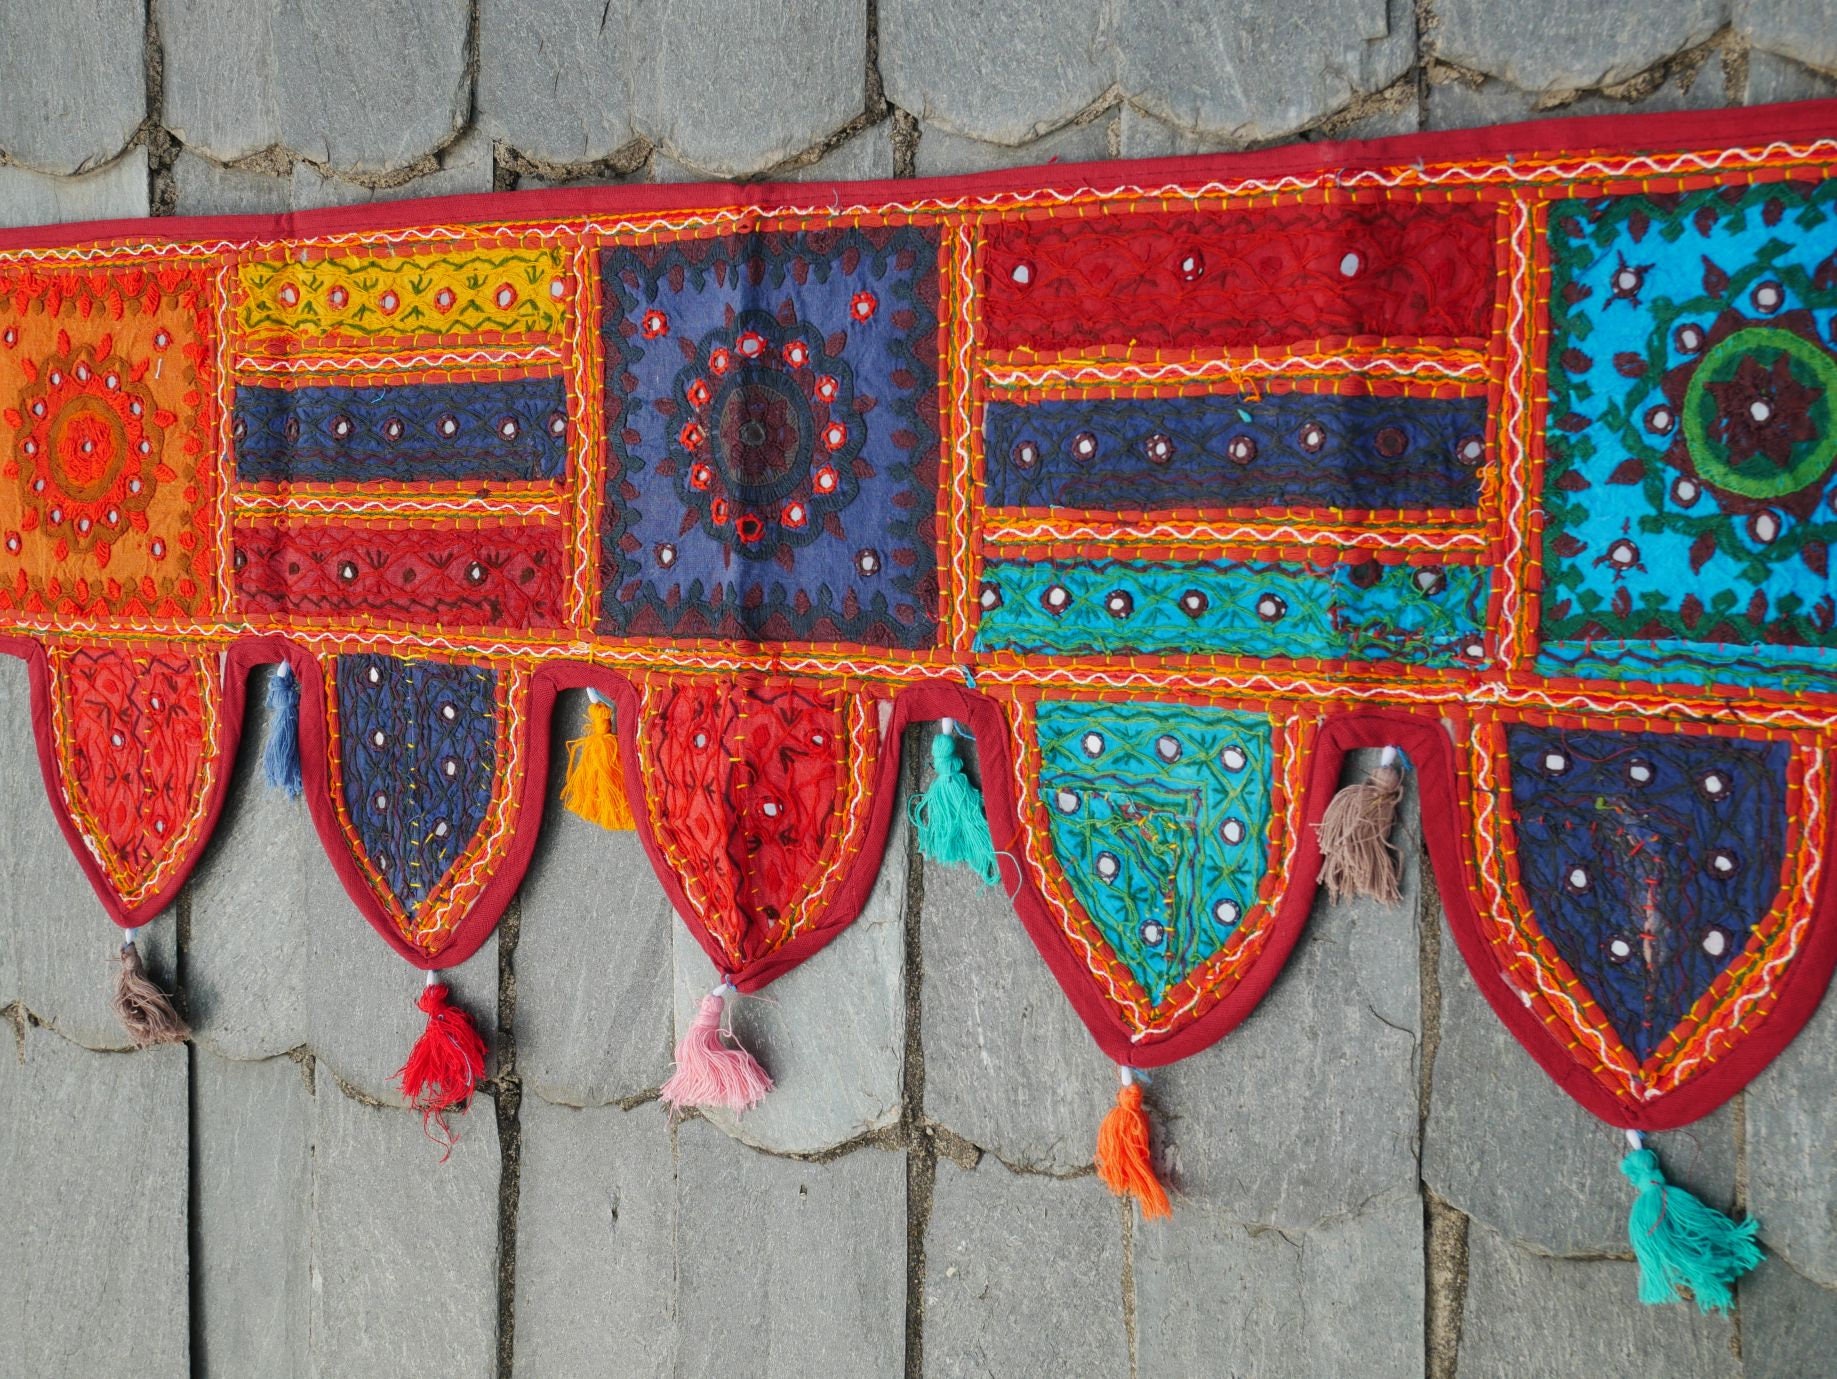 Vintage Indian Red Patchwork Toran Embroidery Door Valances Wall Hanging Decor 